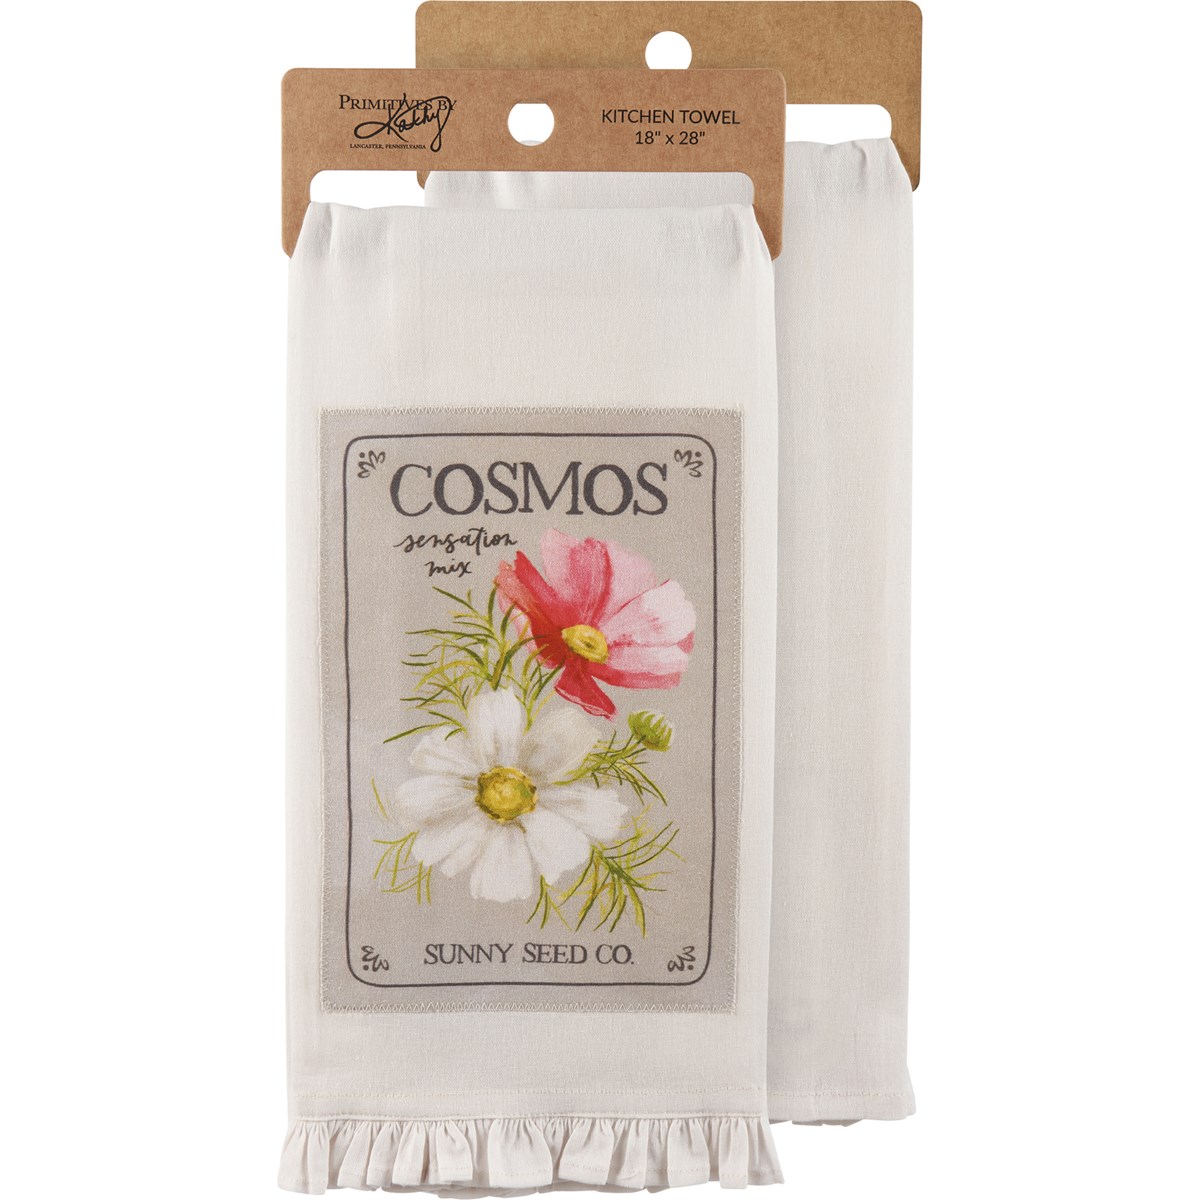 Cosmos Kitchen Towel - Cotton